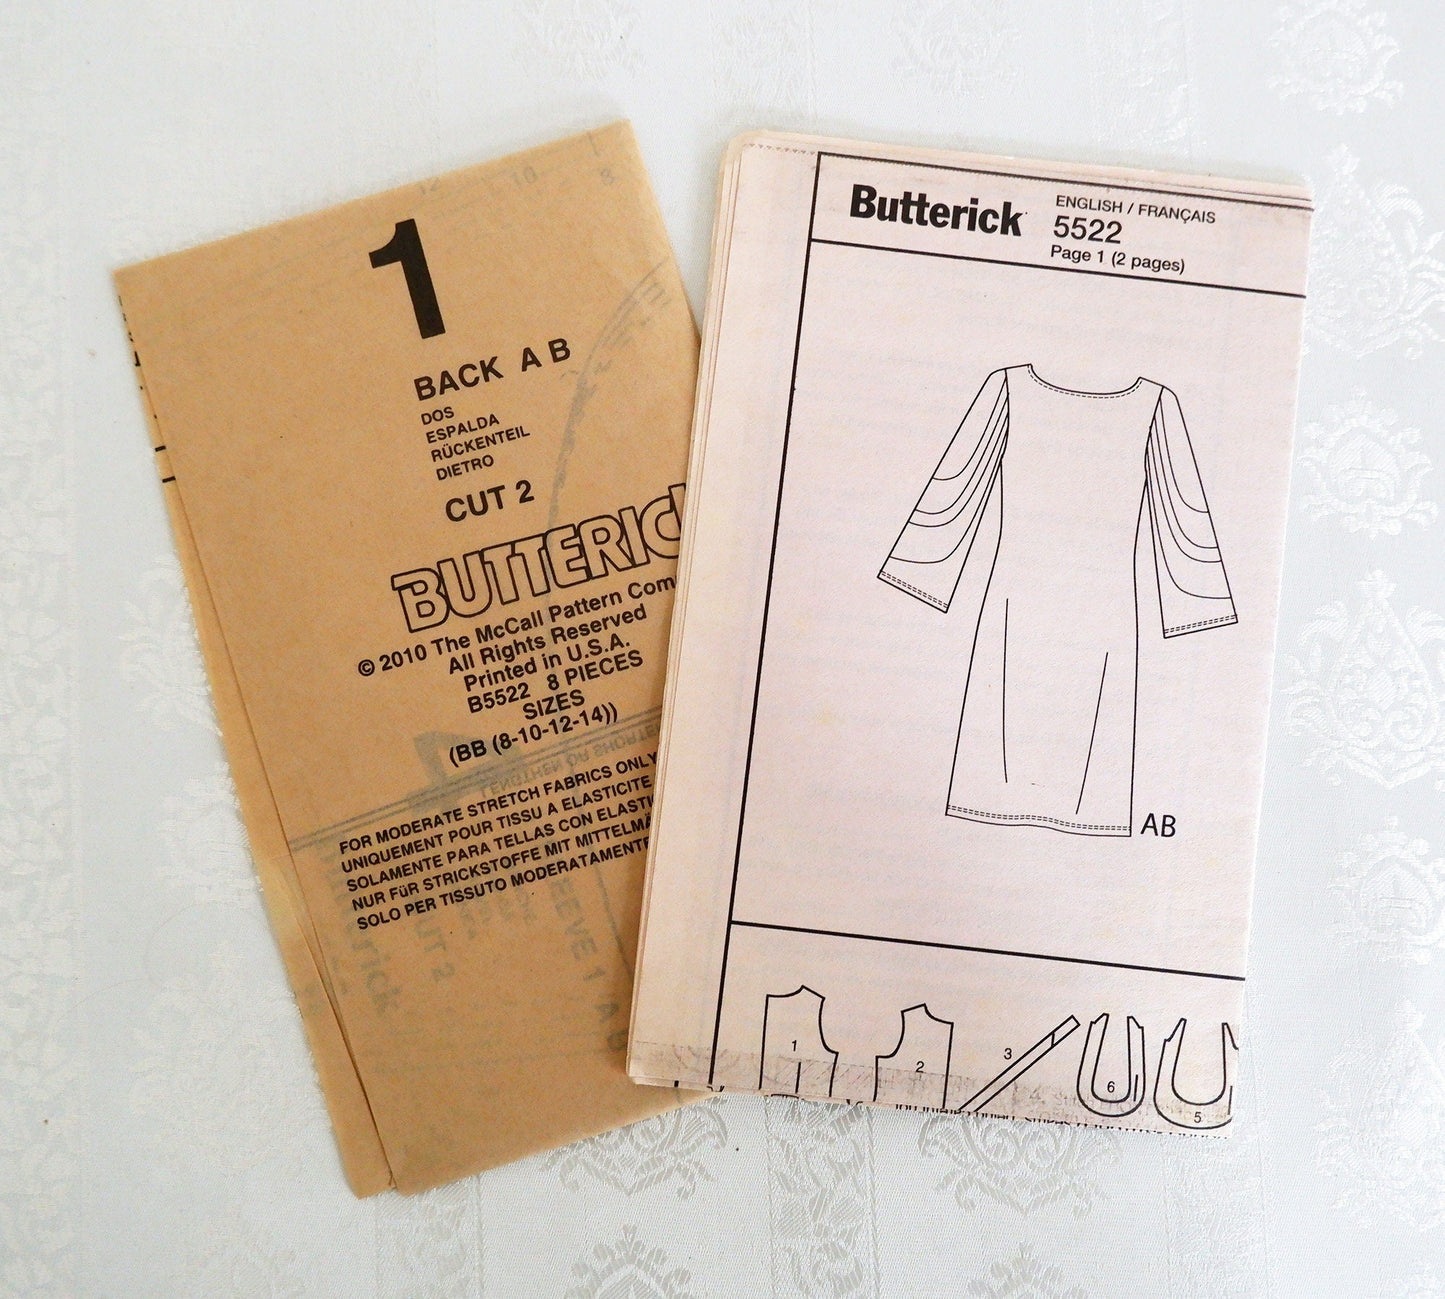 Butterick B5522, Misses' dress pattern, Sizes 8 - 14